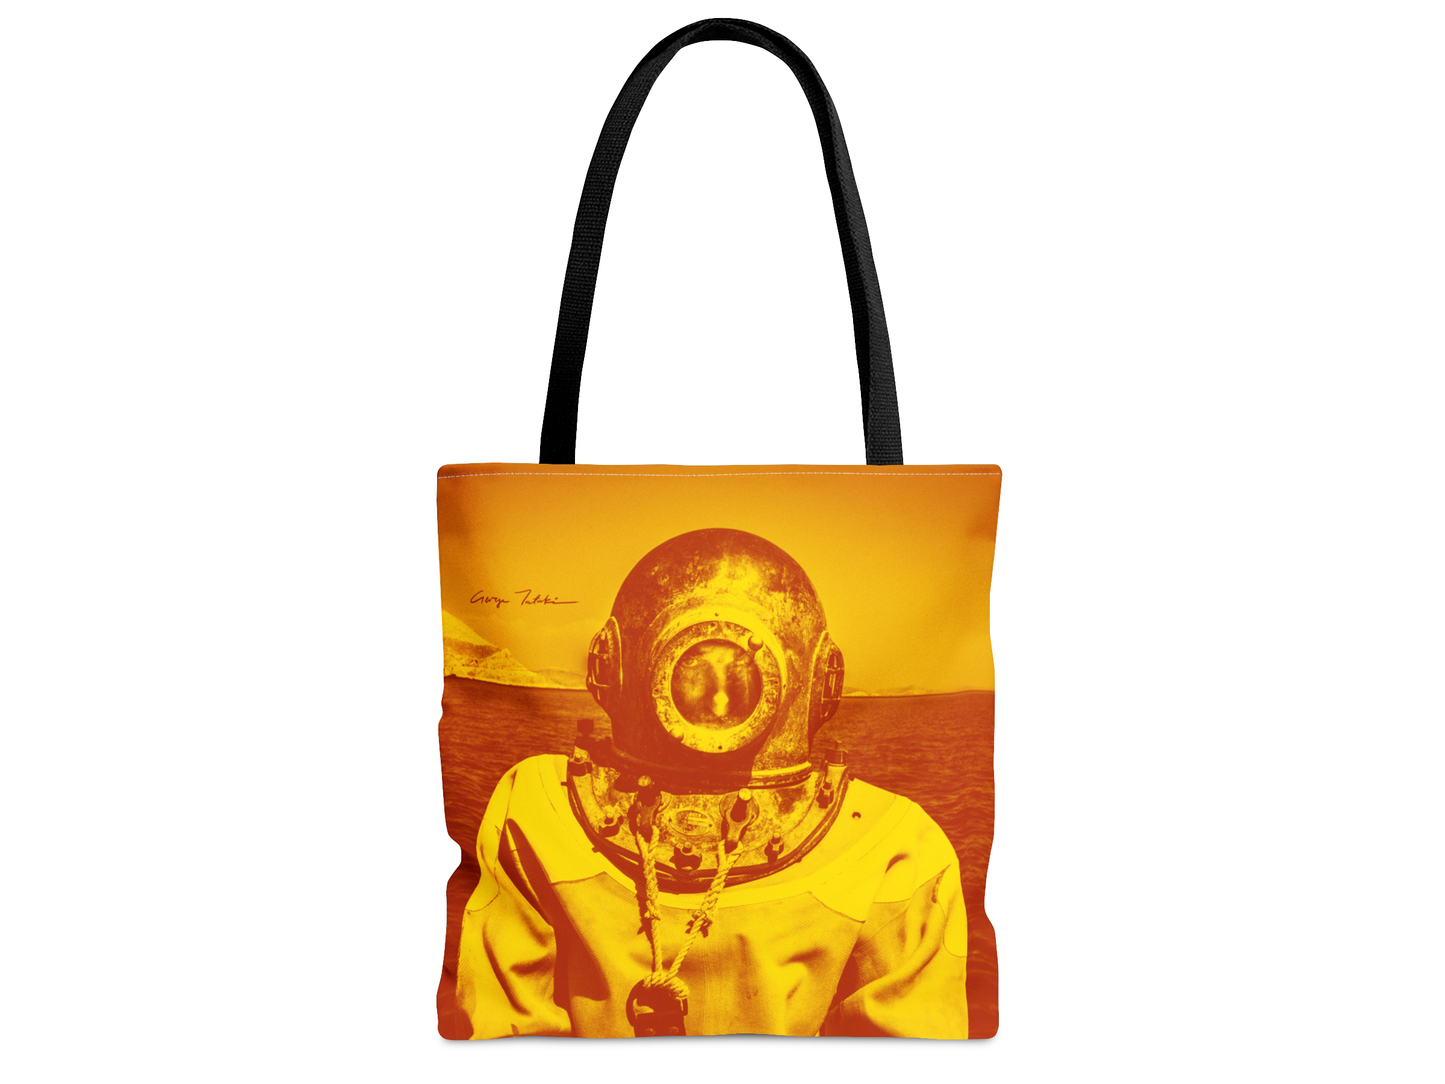 Kalymnos Sponge Diver Tote Bag - Vibrant Yellow-Orange Gradient Print - front